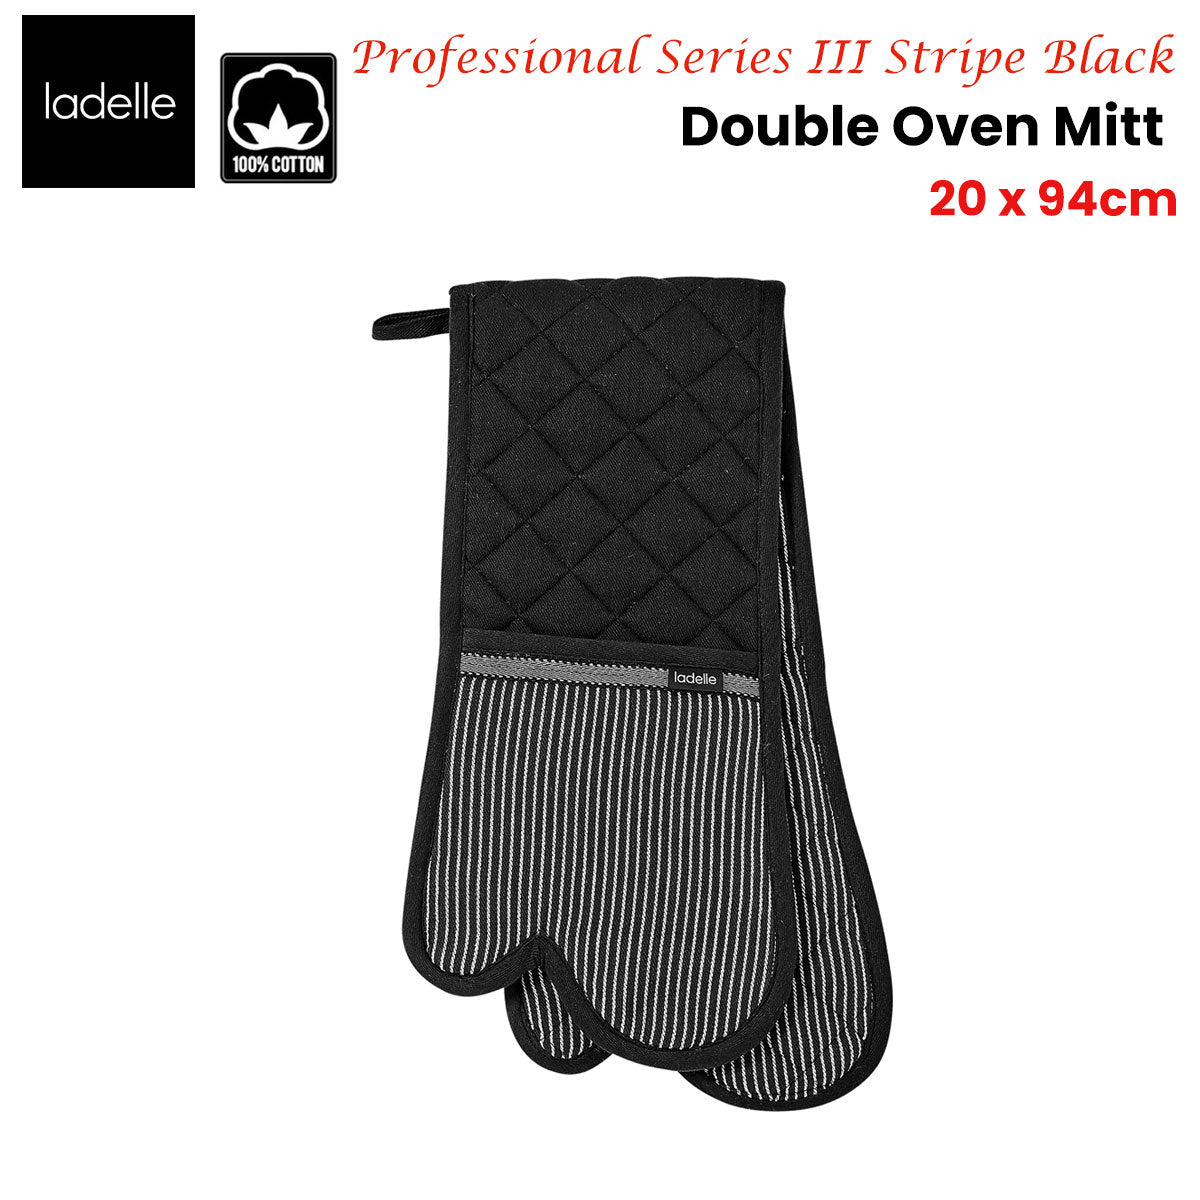 Ladelle Professional Series Stripe Black Double Oven Mitt 20 x 94 cm - Newstart Furniture